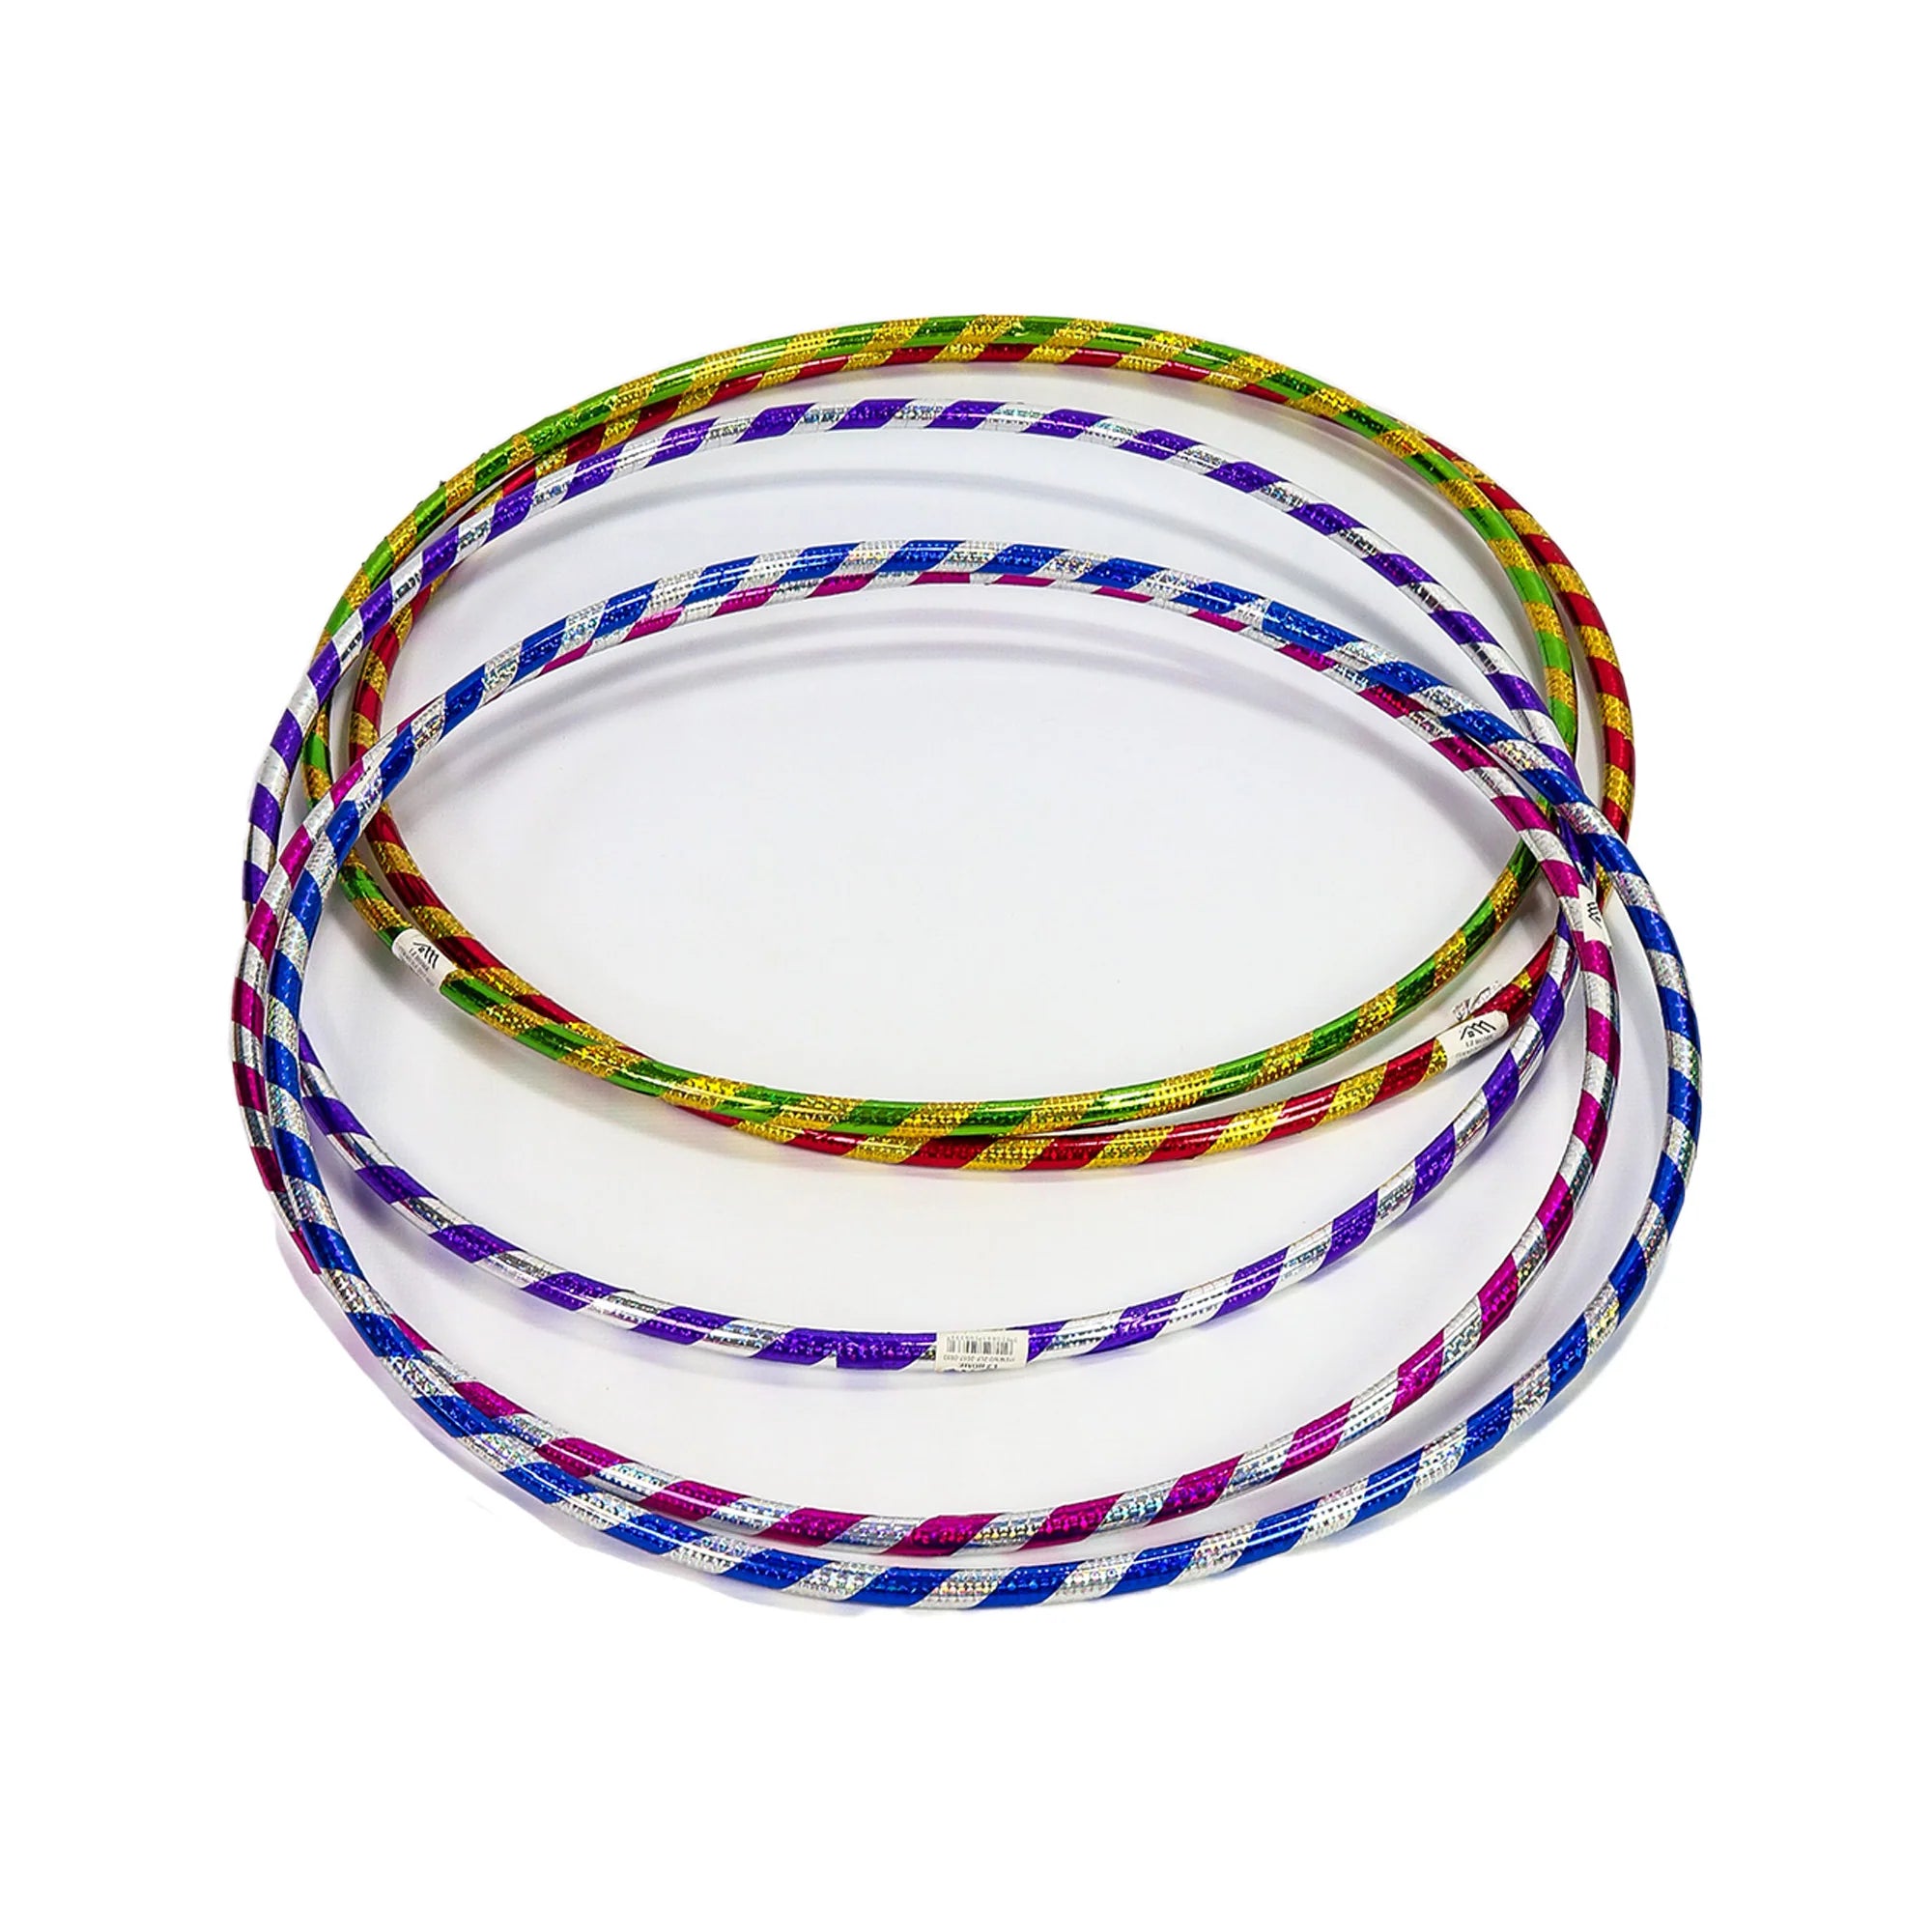 Hula Hoops Plastic - Multi Color 2x65cm